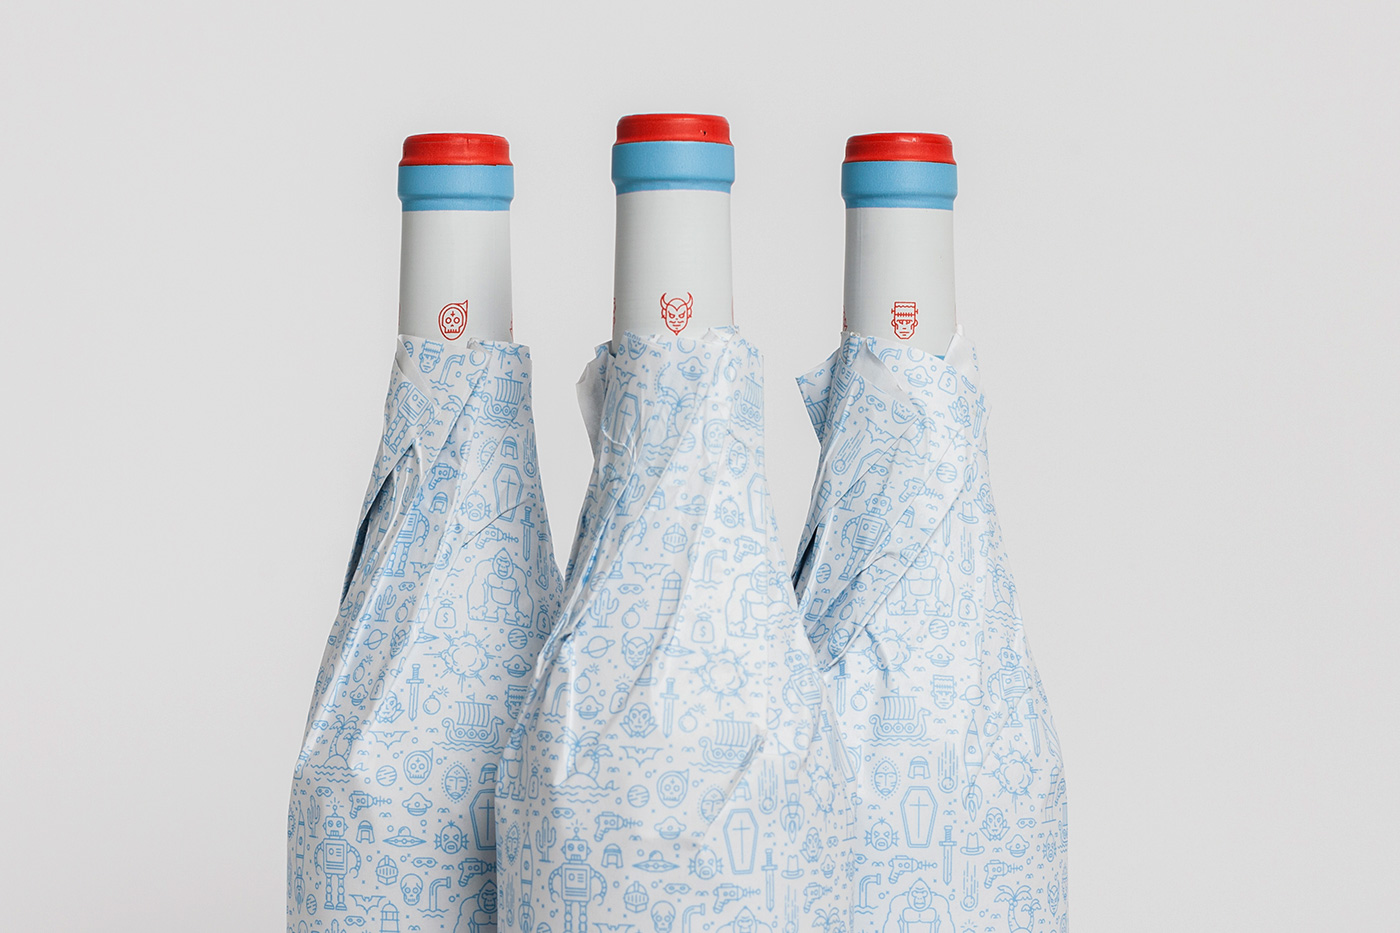 pixelarte-diseno-packaging-botella-de-vino-Ostras_pedrin-Bodega-Vicente_Gandia